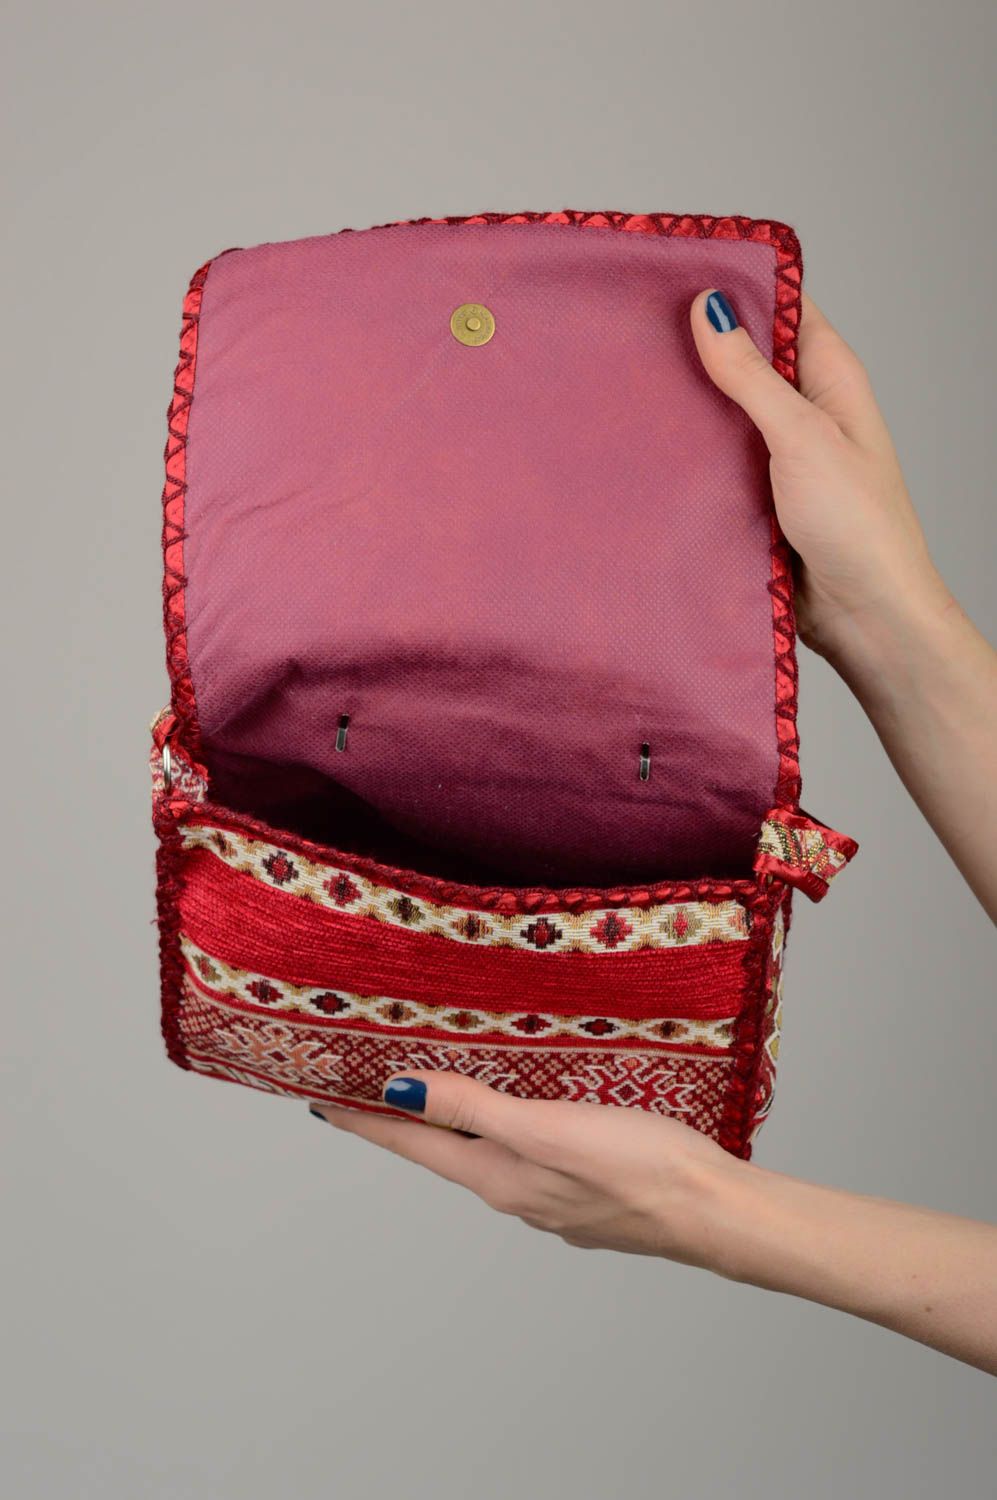 Handmade carpet bag small shoulder bag fabric bag stylish accessory fashion gift photo 4